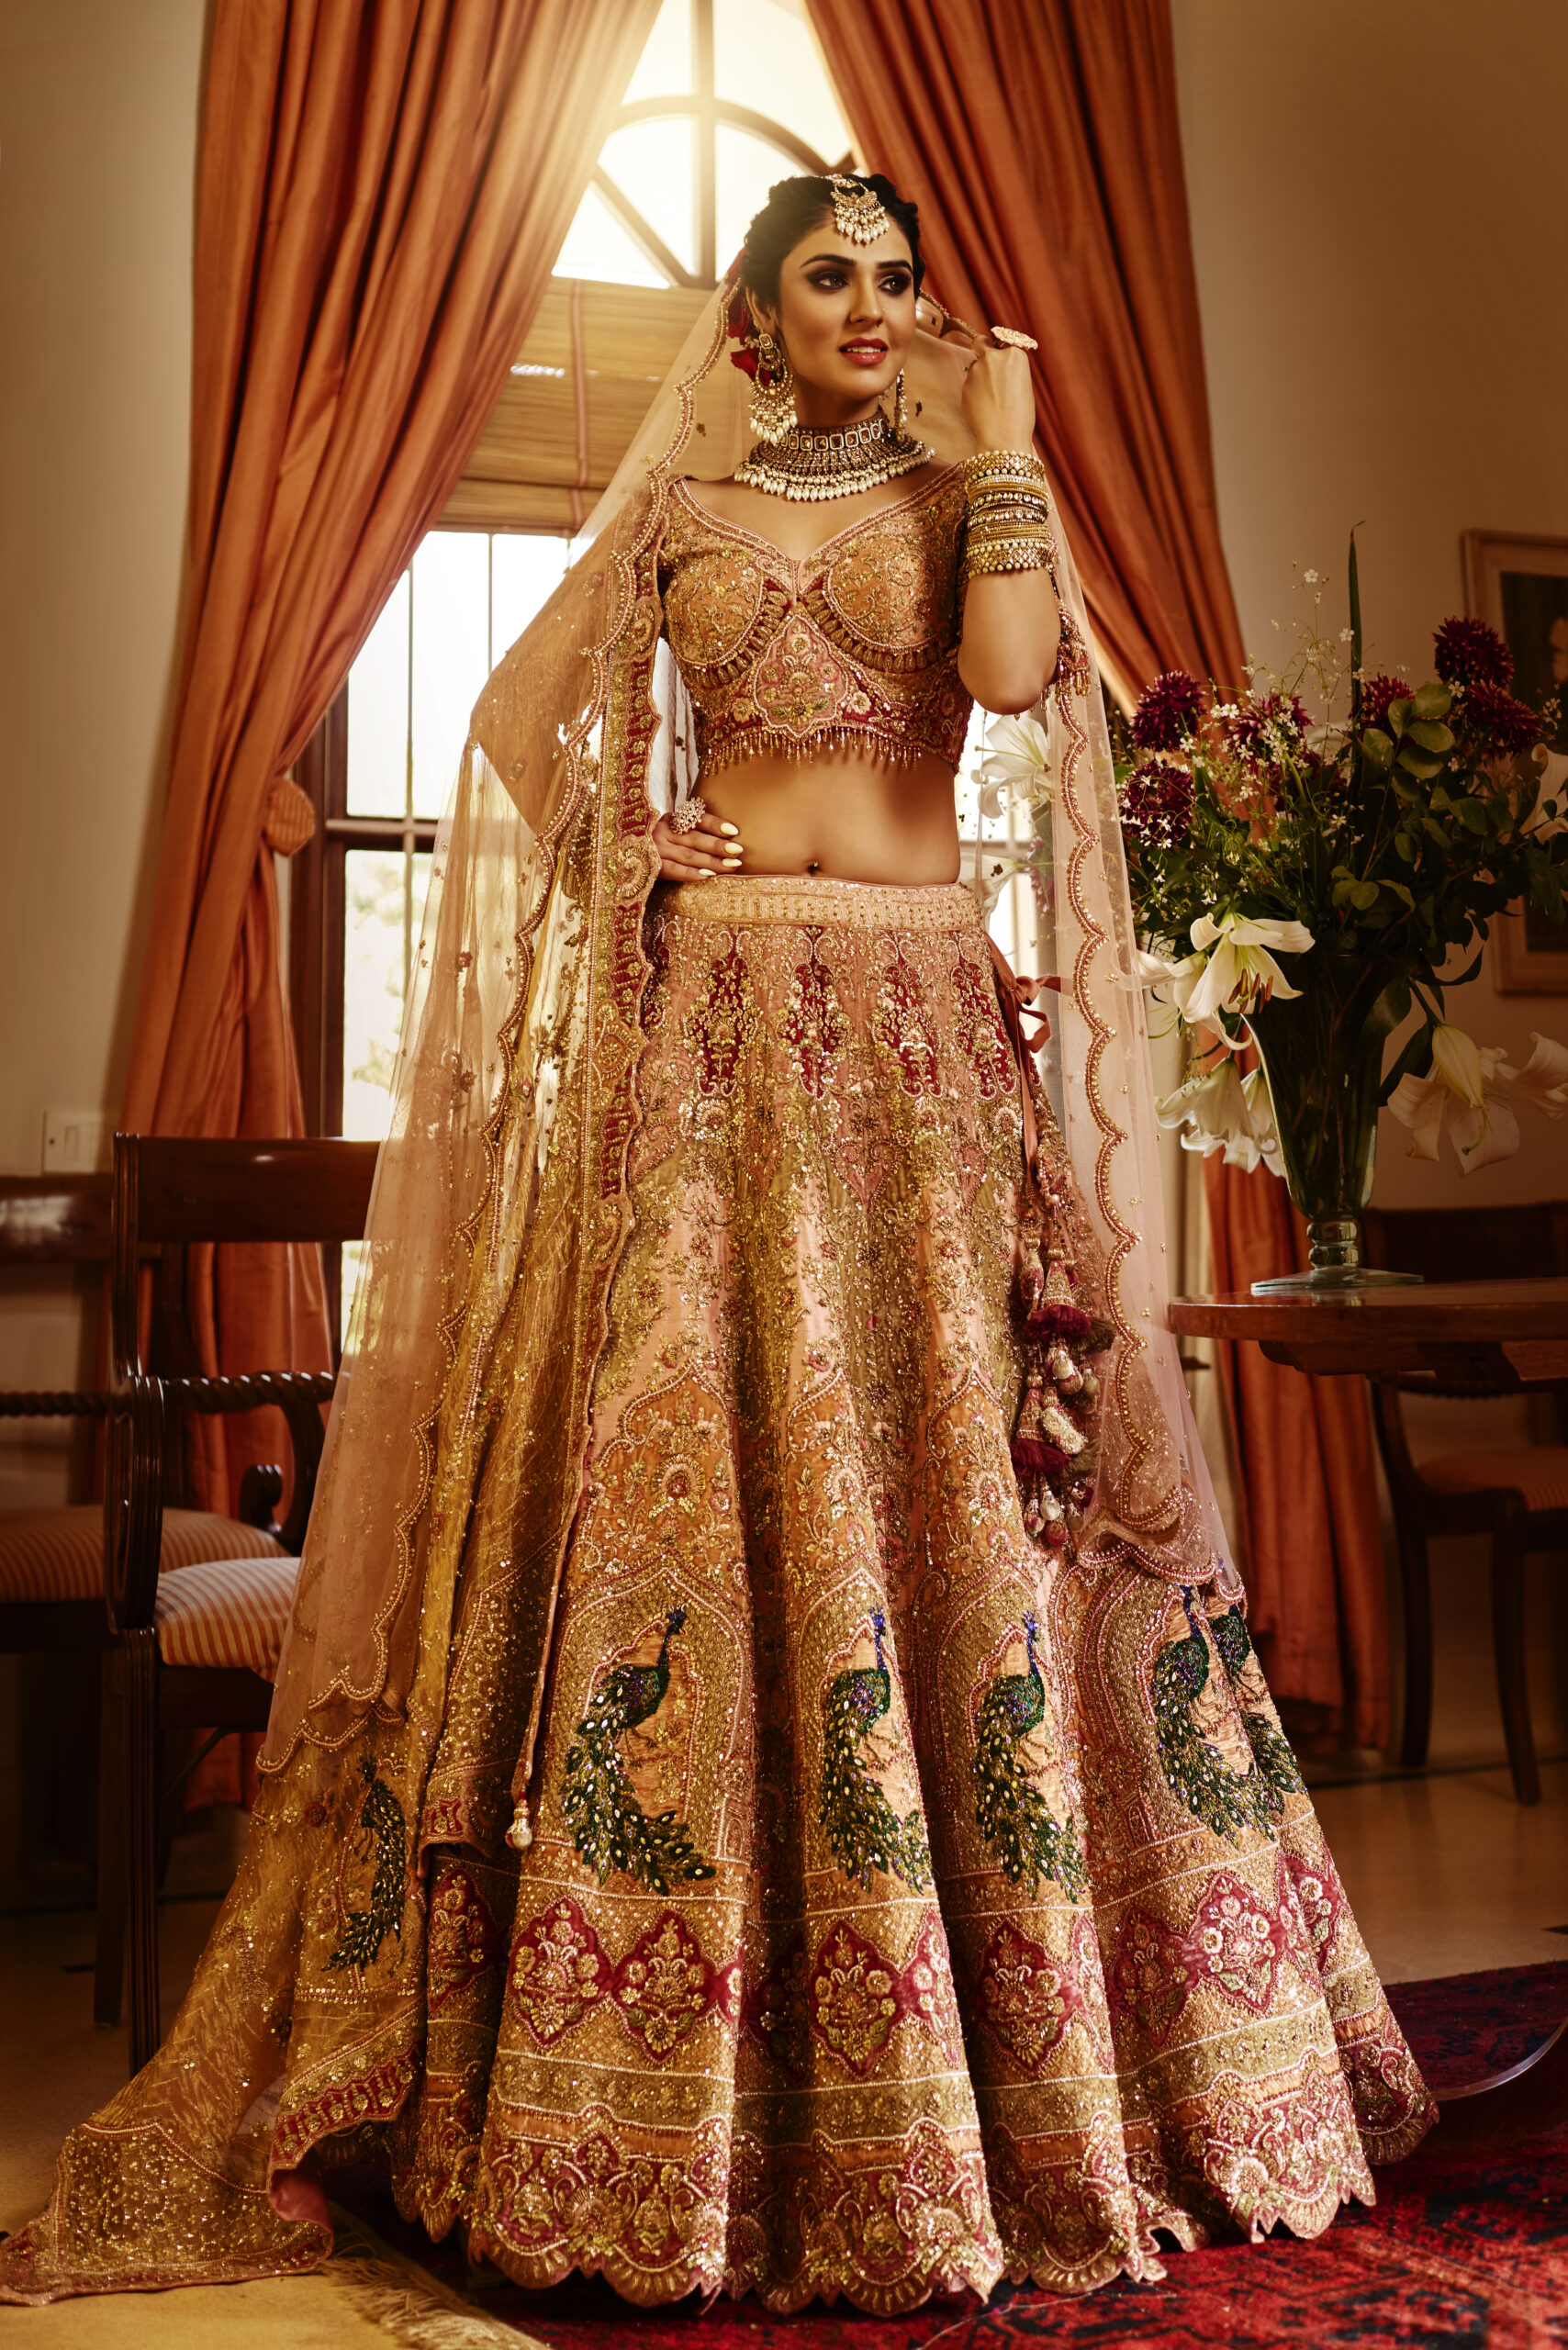 Regal Radiance: Beautiful Bridal Velvet Lehenga Choli at Rs 8999.00 |  वेलवेट लेहेंगा चोली - Chiwaga Fashion, Pune | ID: 2852115502455